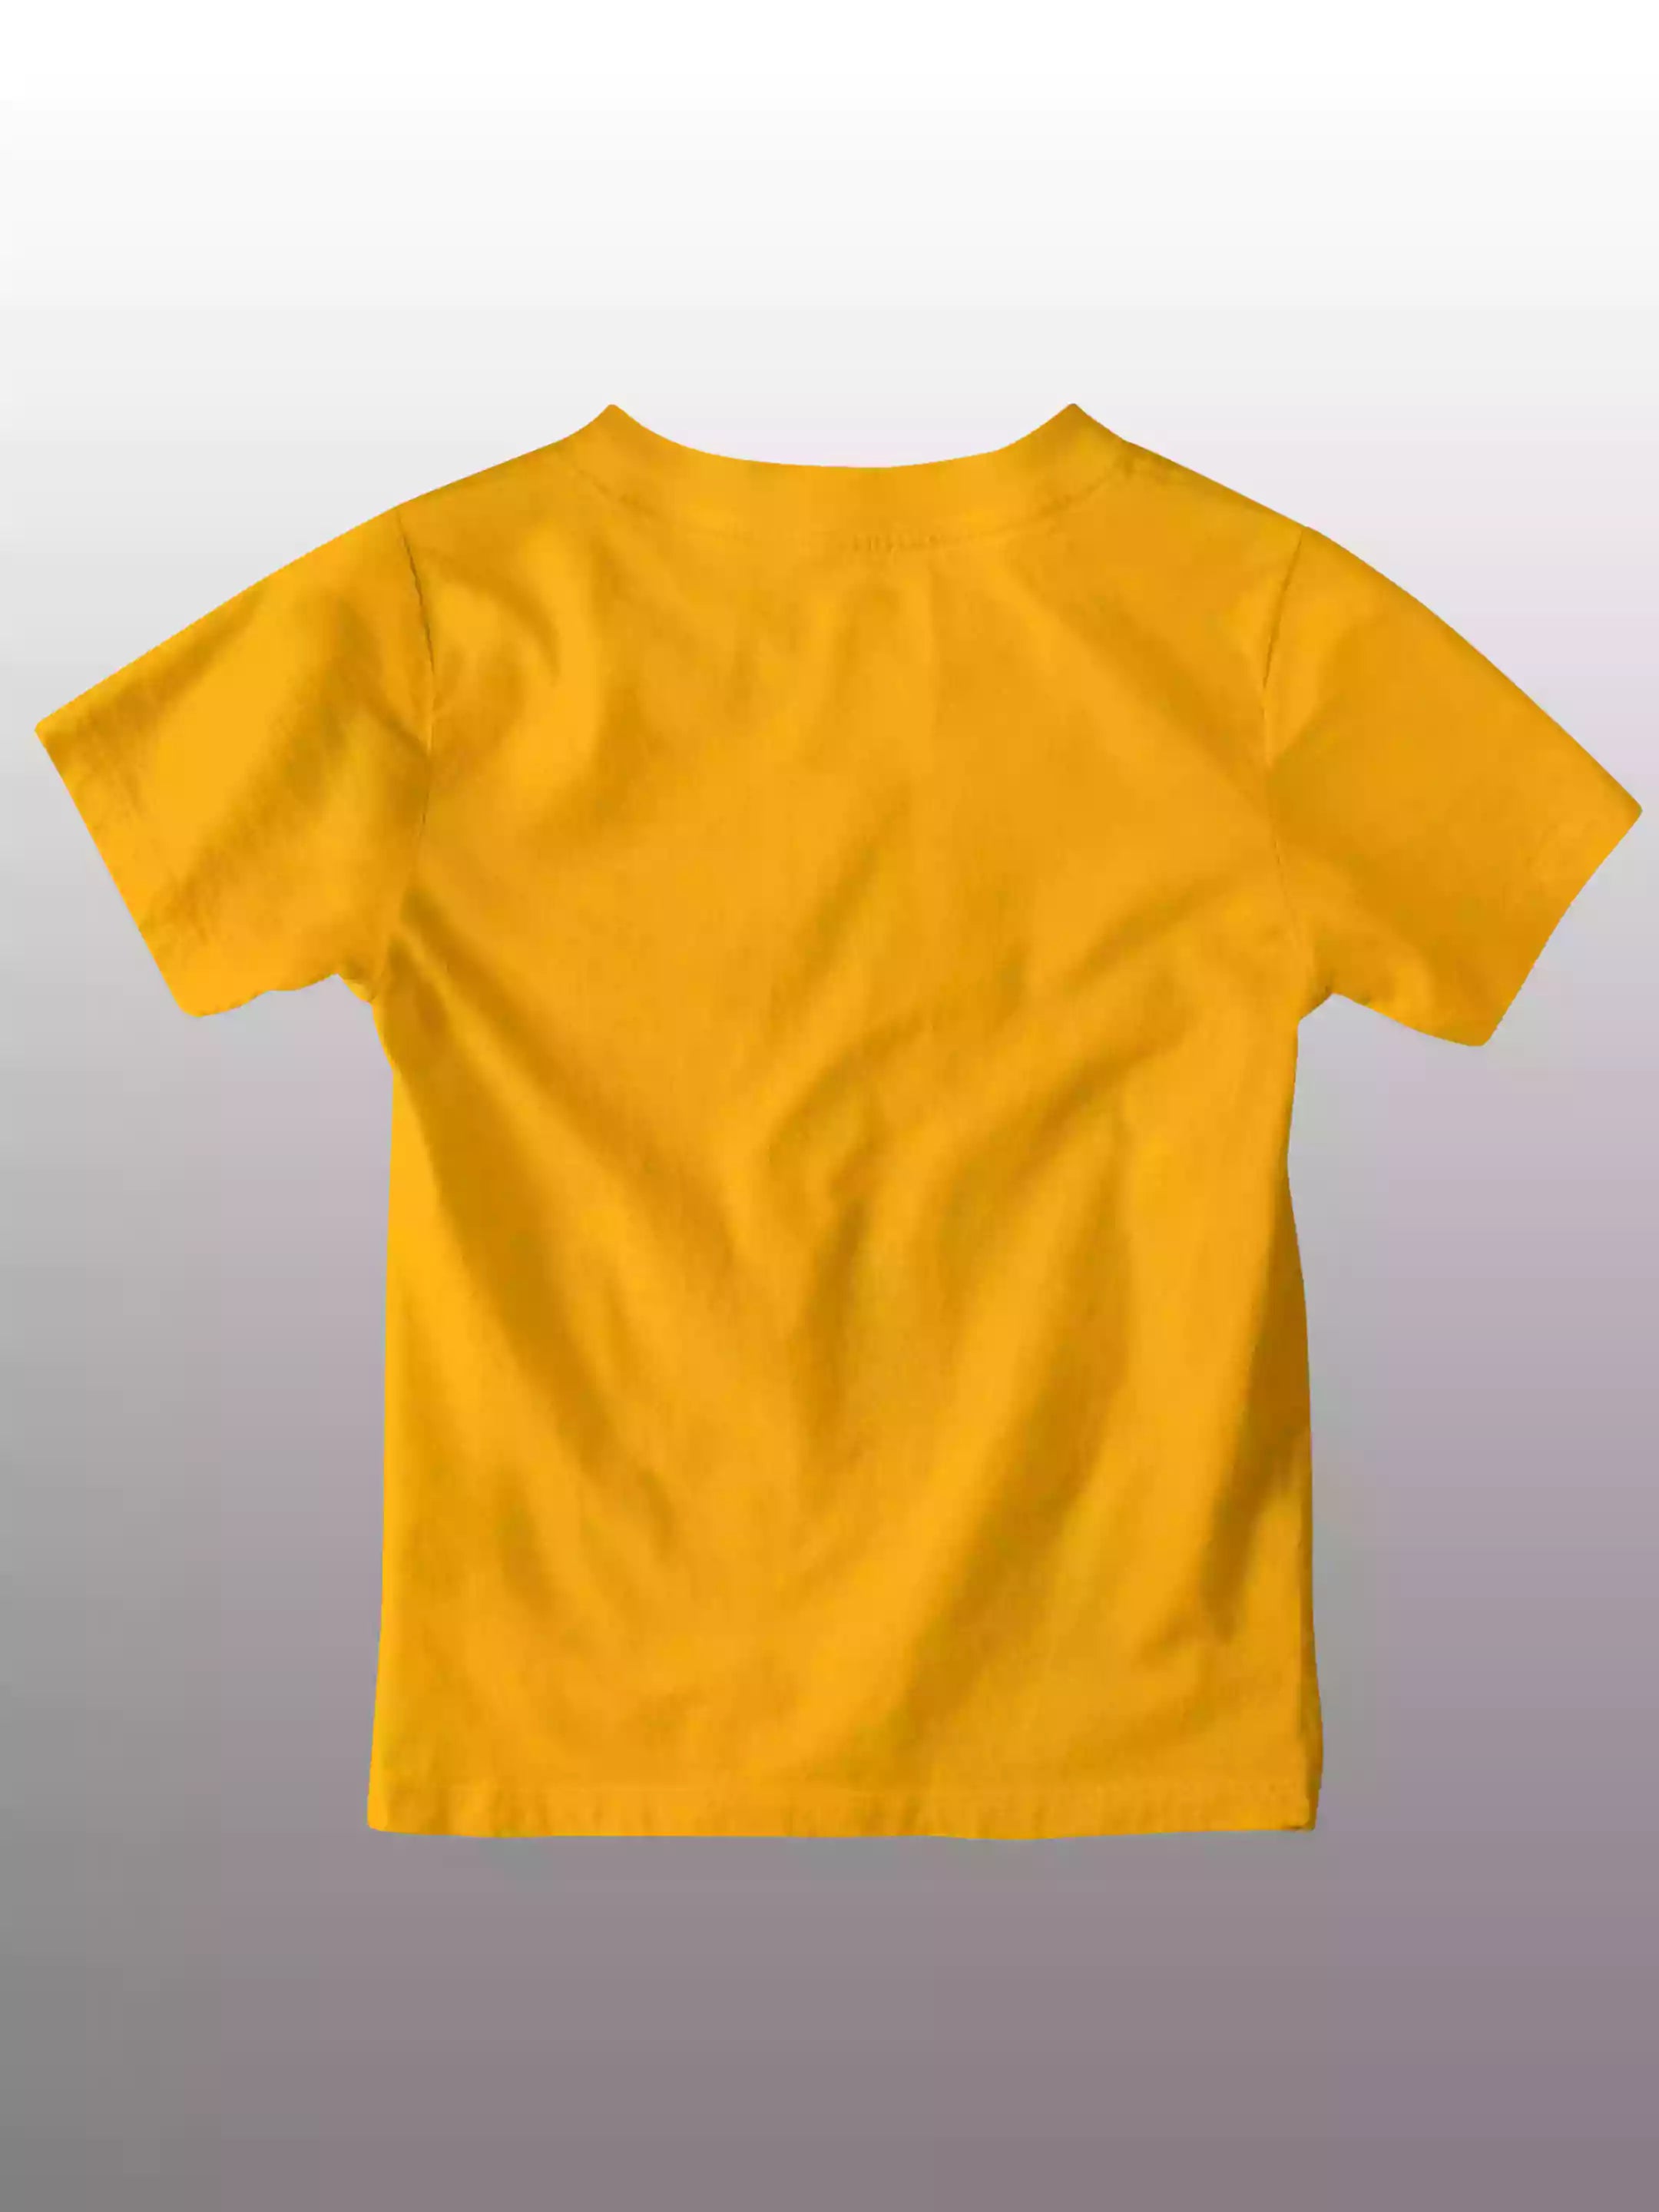 Zopalu - Sukhiaatma Unisex Graphic Printed Kids T-shirt